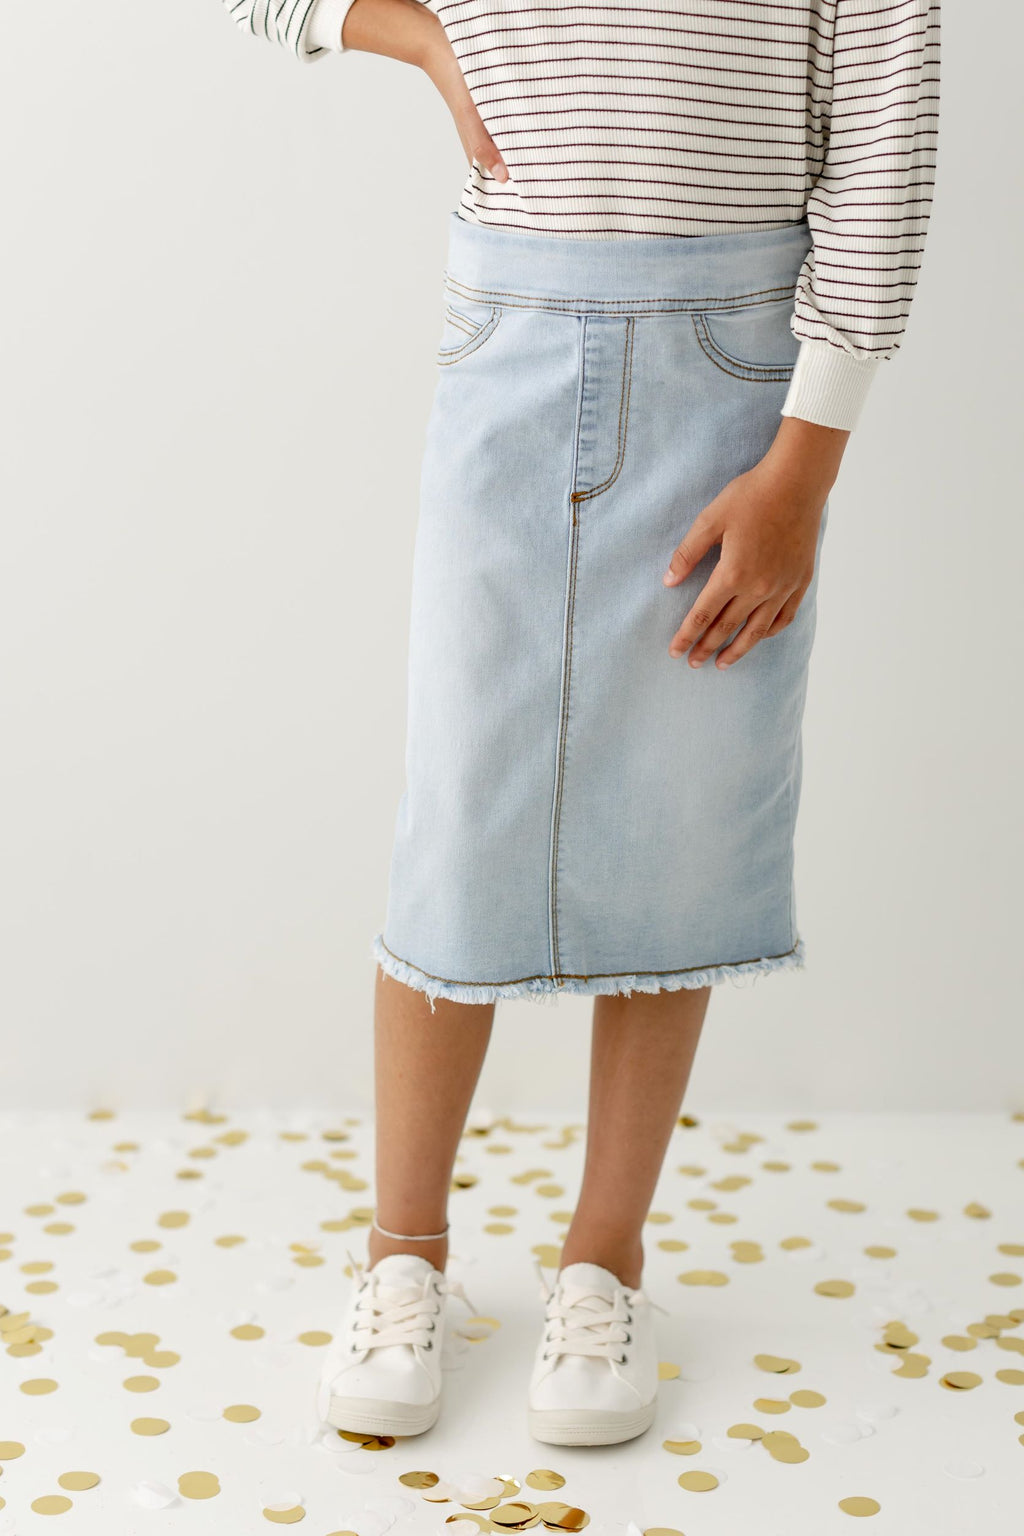 'Sara' Girl Classic Denim Skirt in Light Wash FINAL SALE